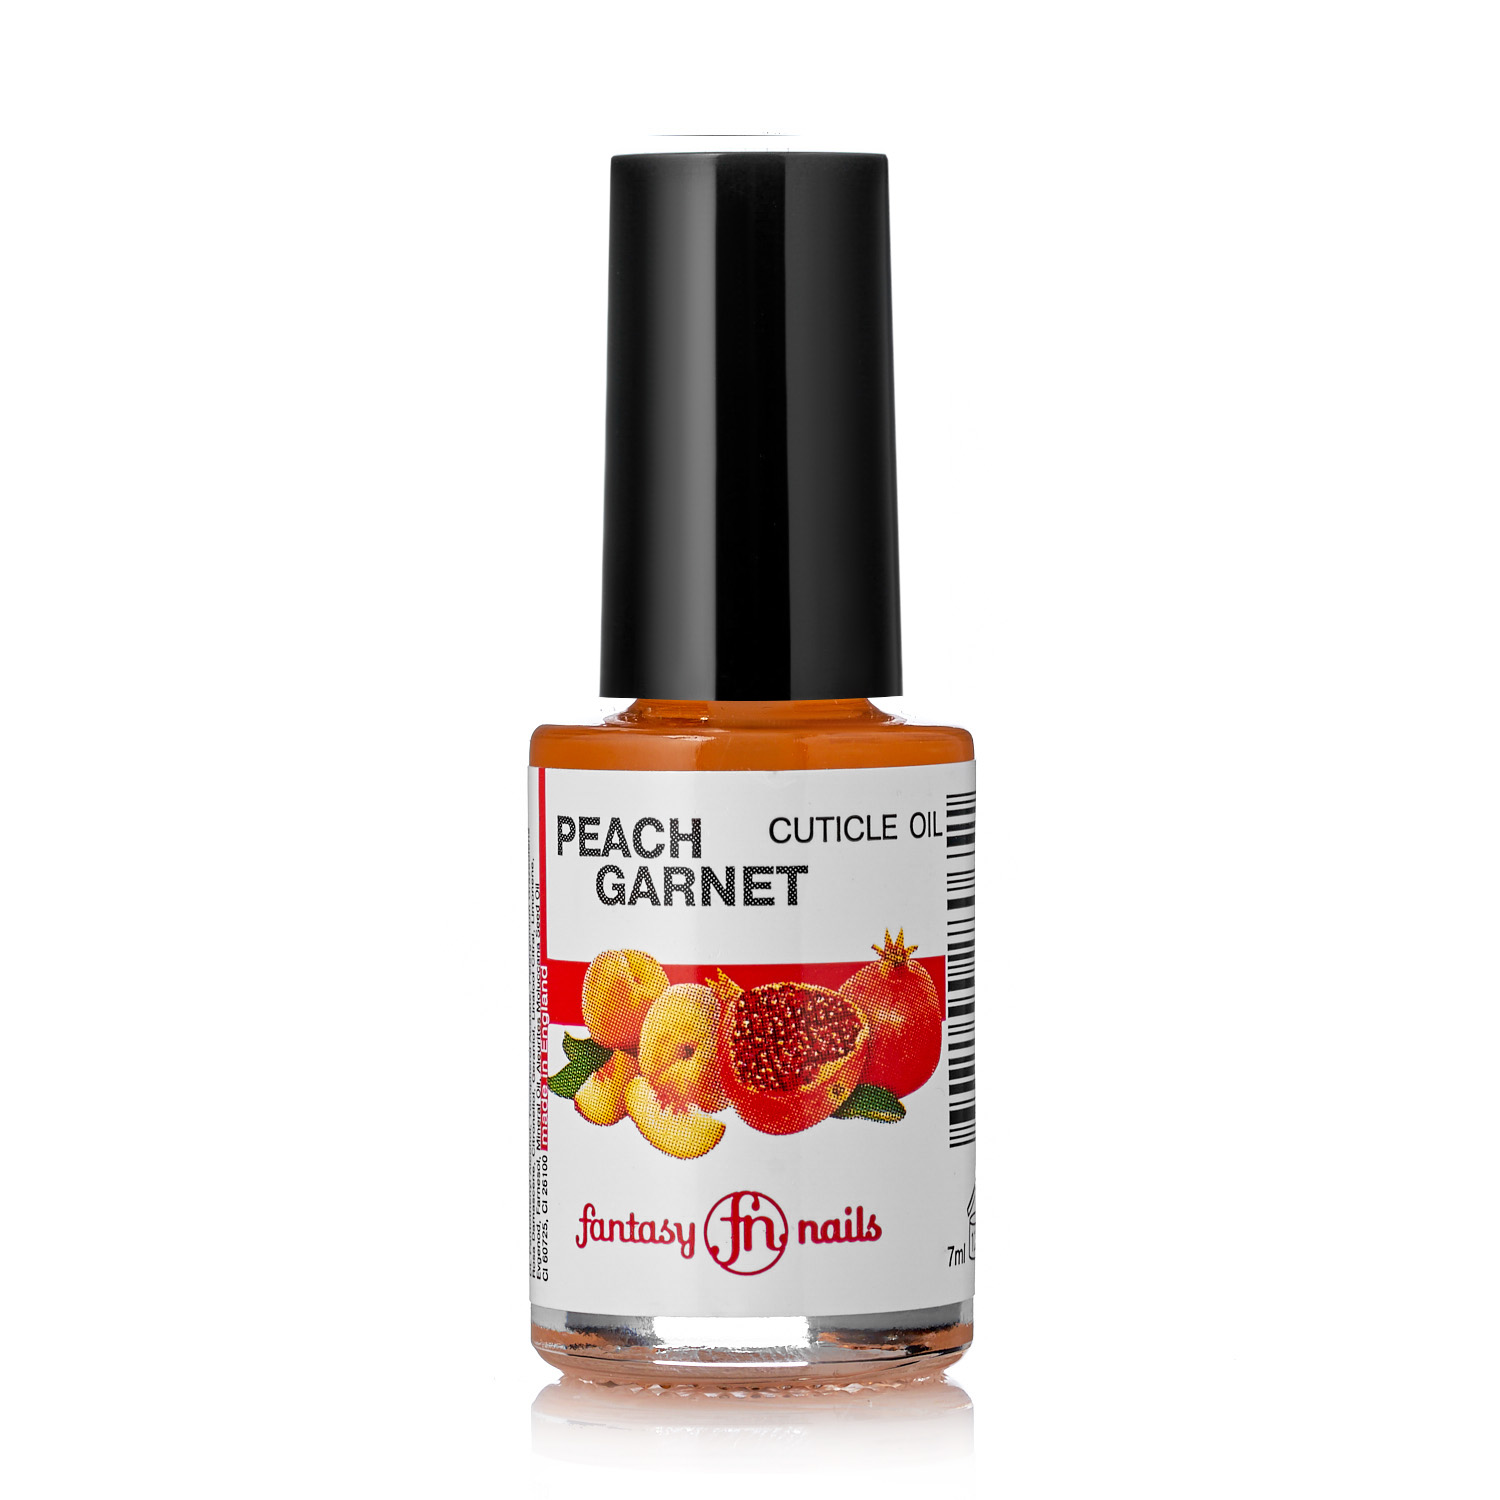 Масло для кутикулы Peach/Garnet («Персик и гранат») 7 ml из каталога Препараты для ногтей в интернет-магазине BPW.style